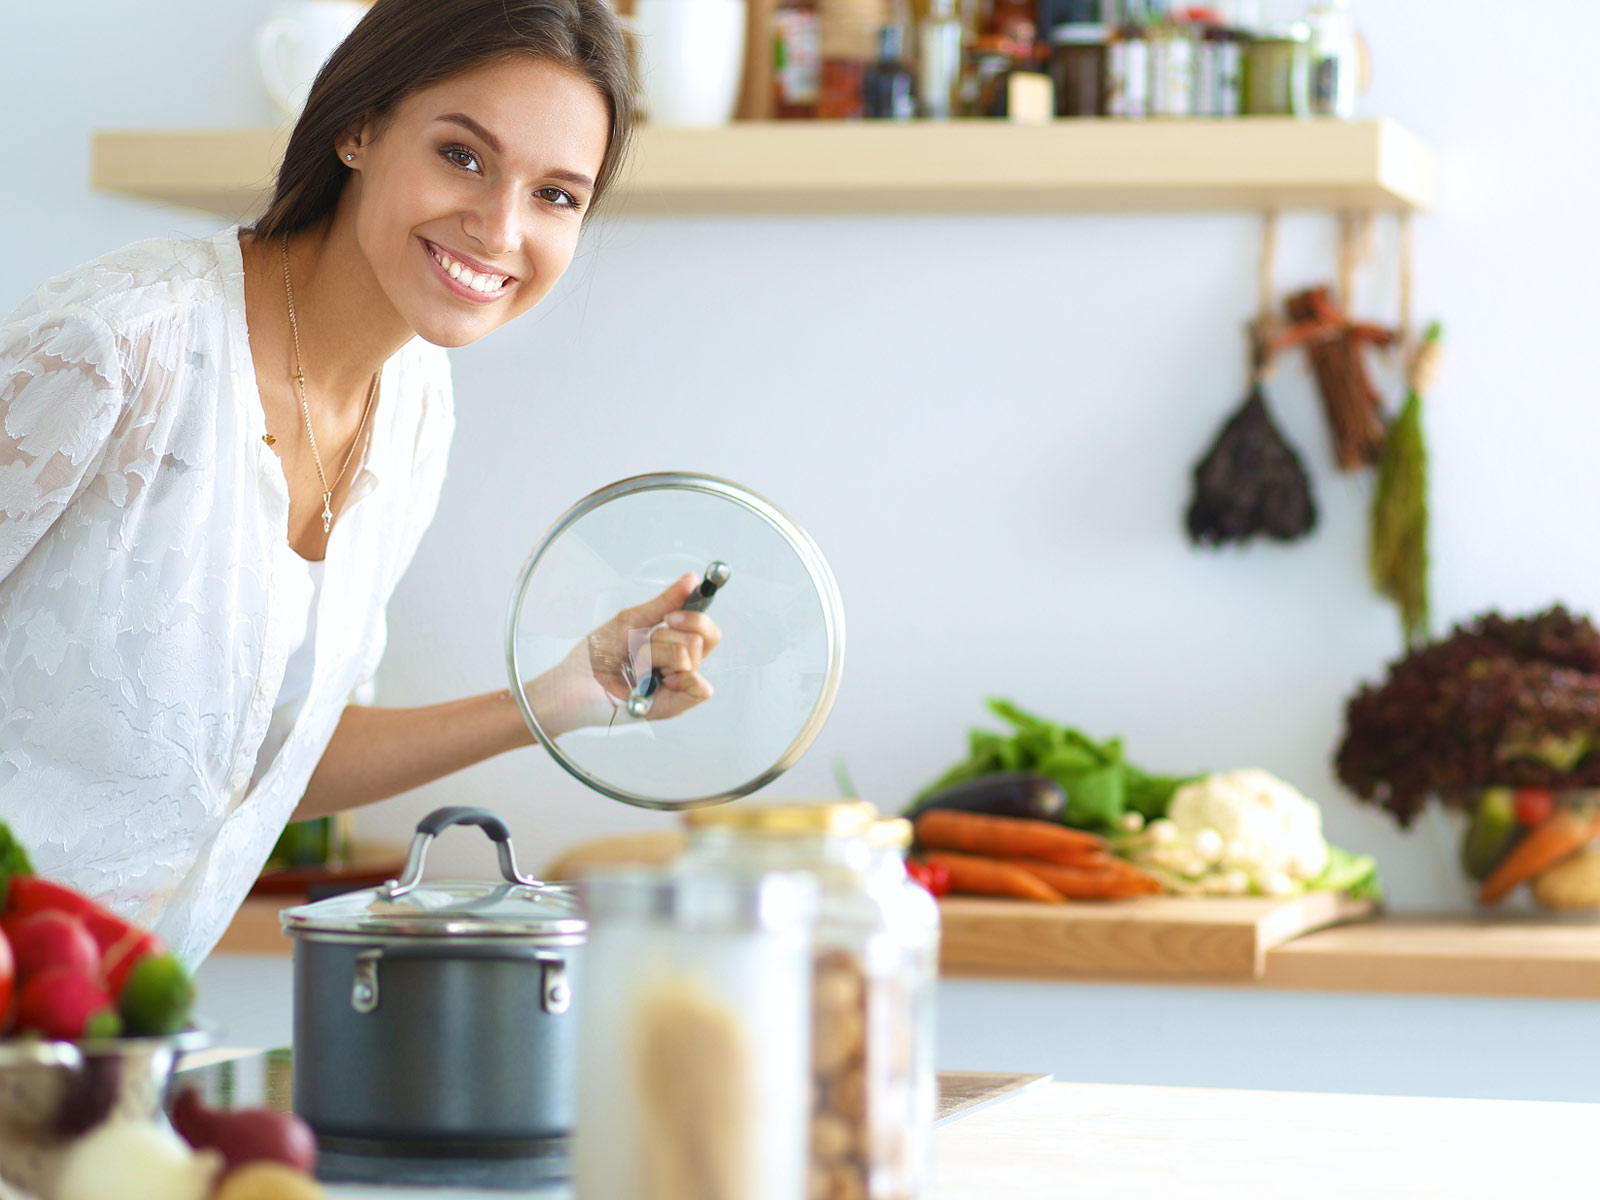 Top 10 kitchen appliances to help fitness lovers cook + eat healthier -  Yanko Design